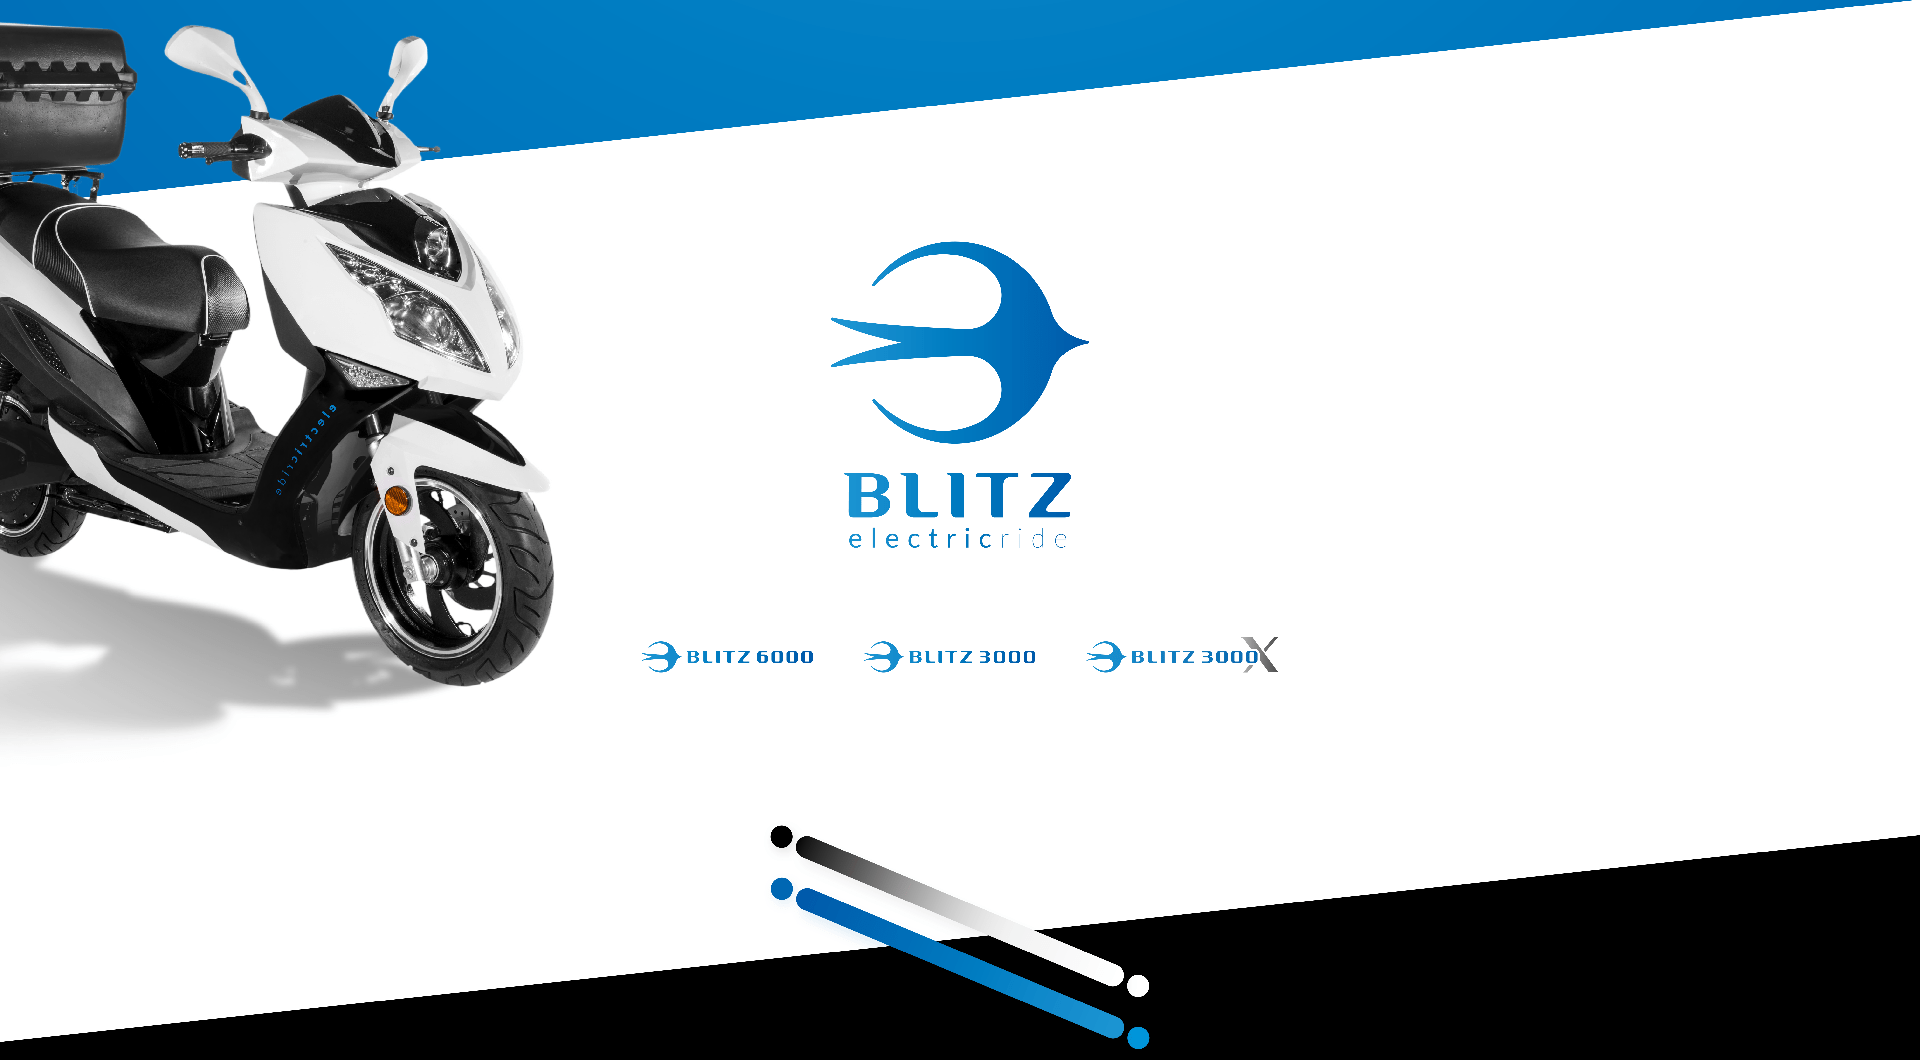 Blitz Motors by Dotan-Lidgi